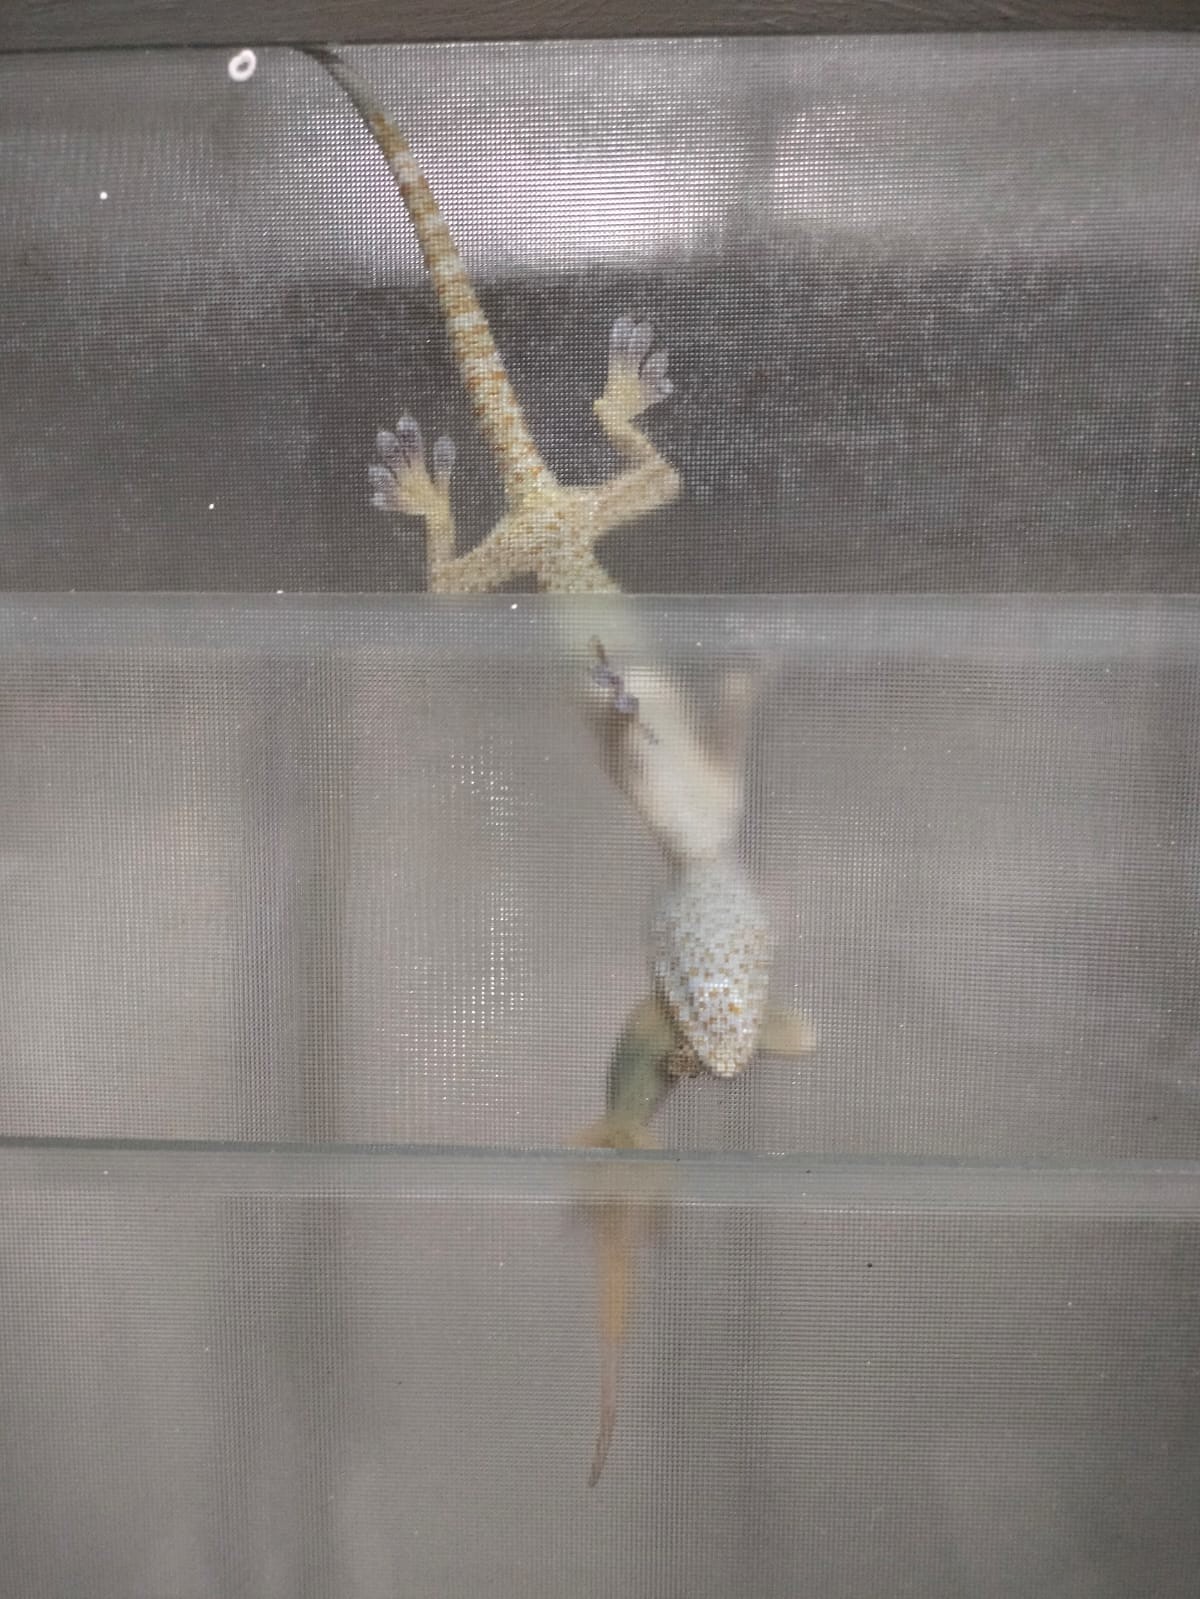 Big Gecko eating Small Gecko